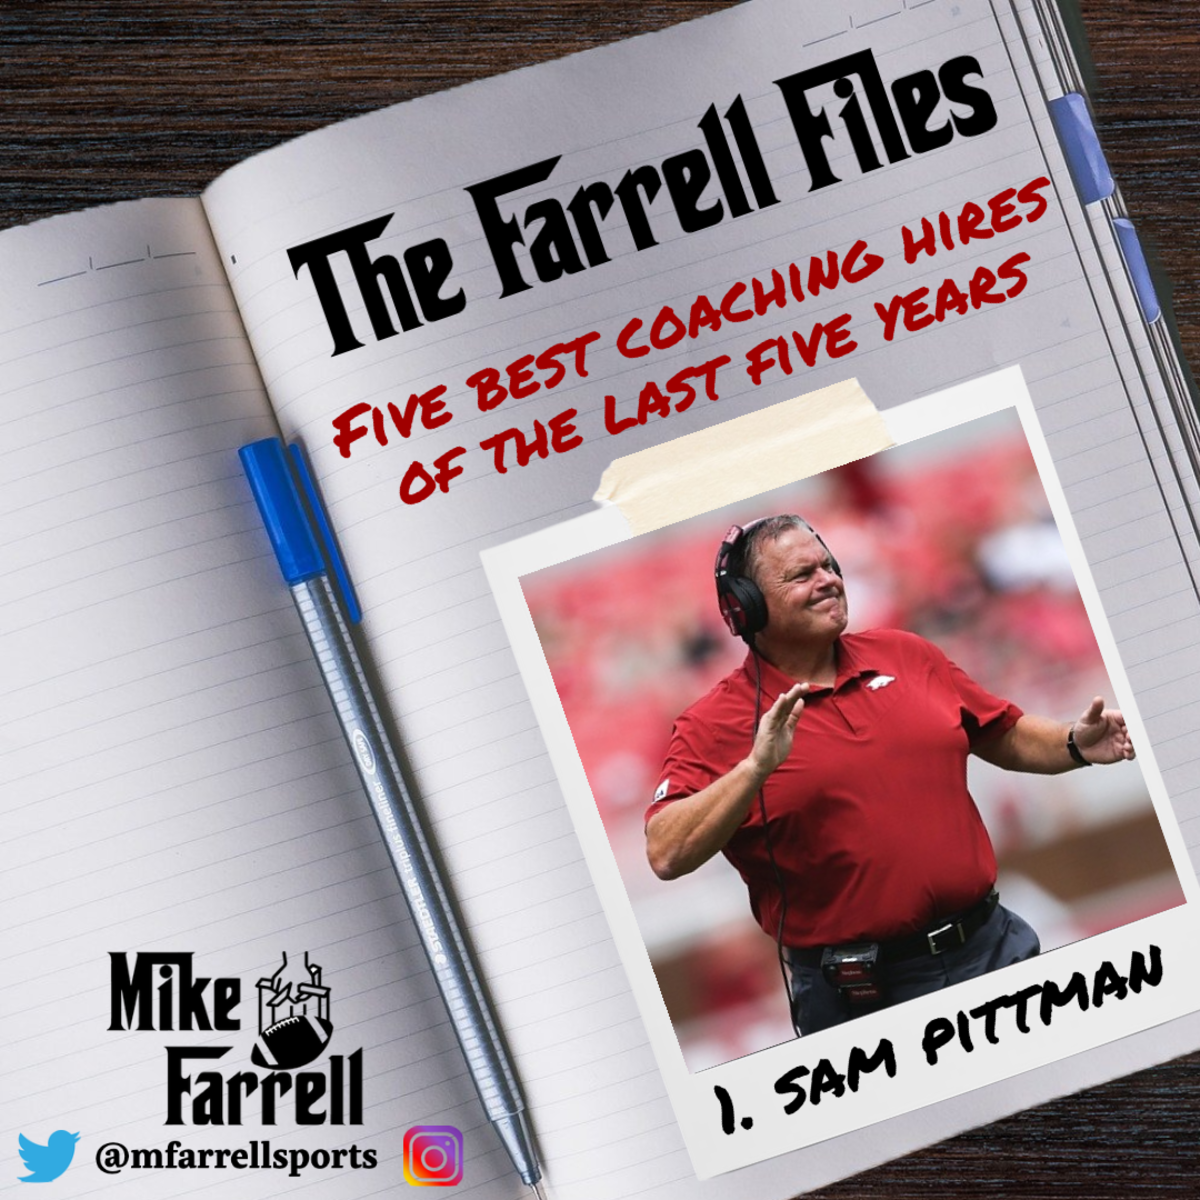 Farrell Files - Sam Pittman